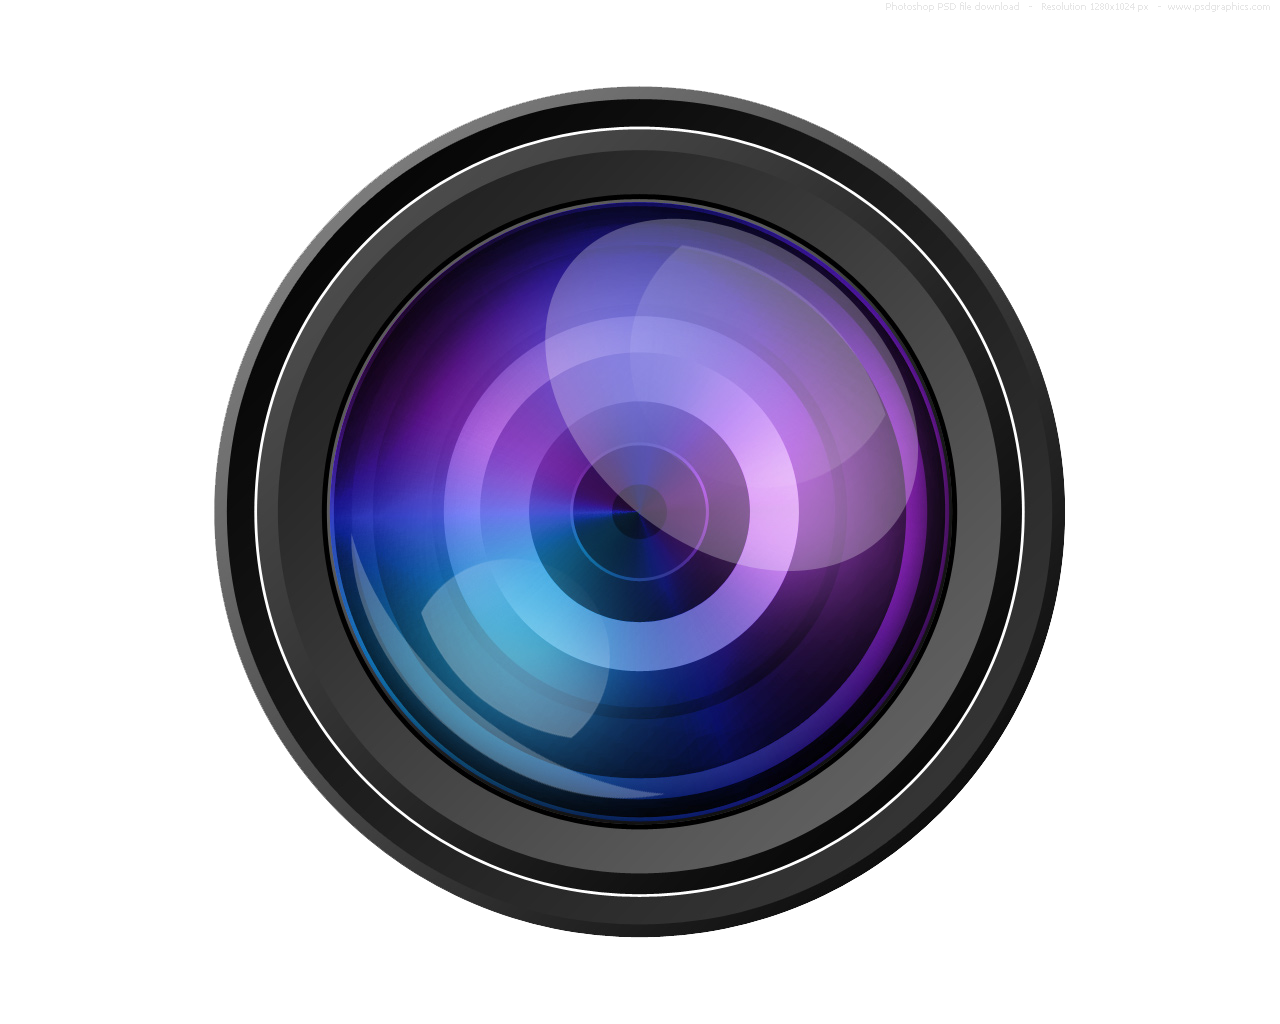 Camera Lens PNG Image in Transparent - Camera Lens Png